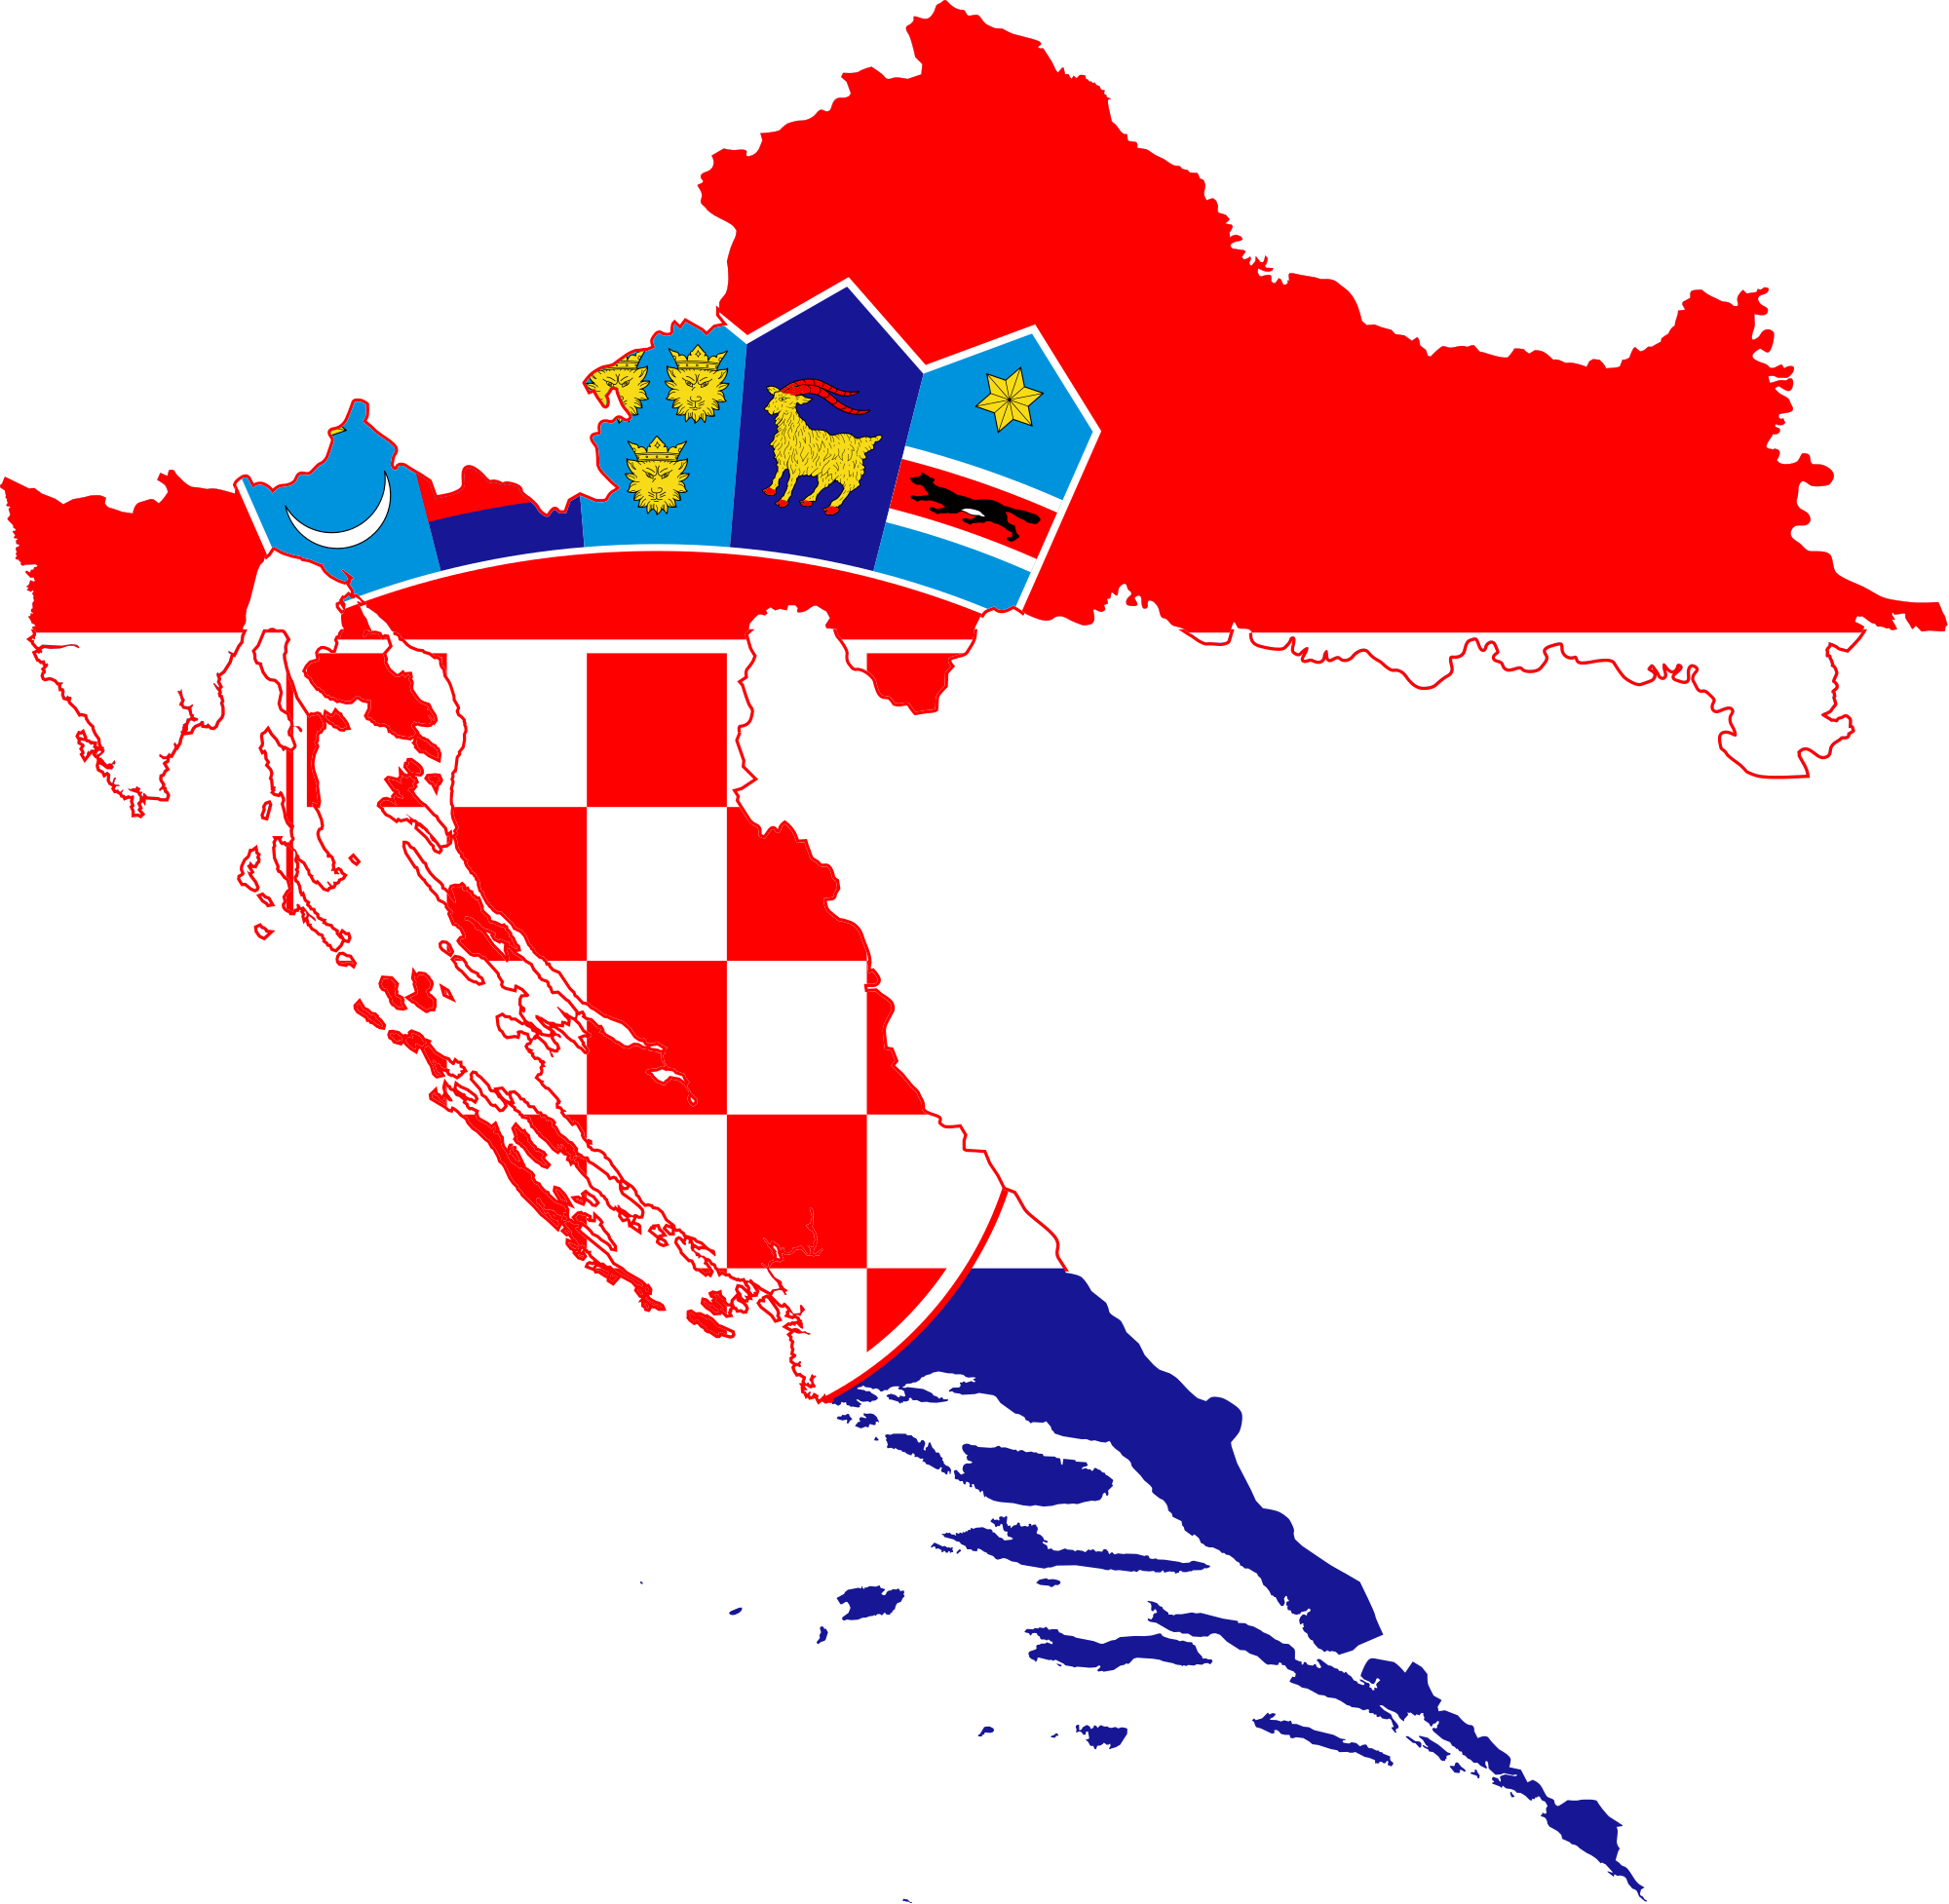 Balkan star from velika kladusa